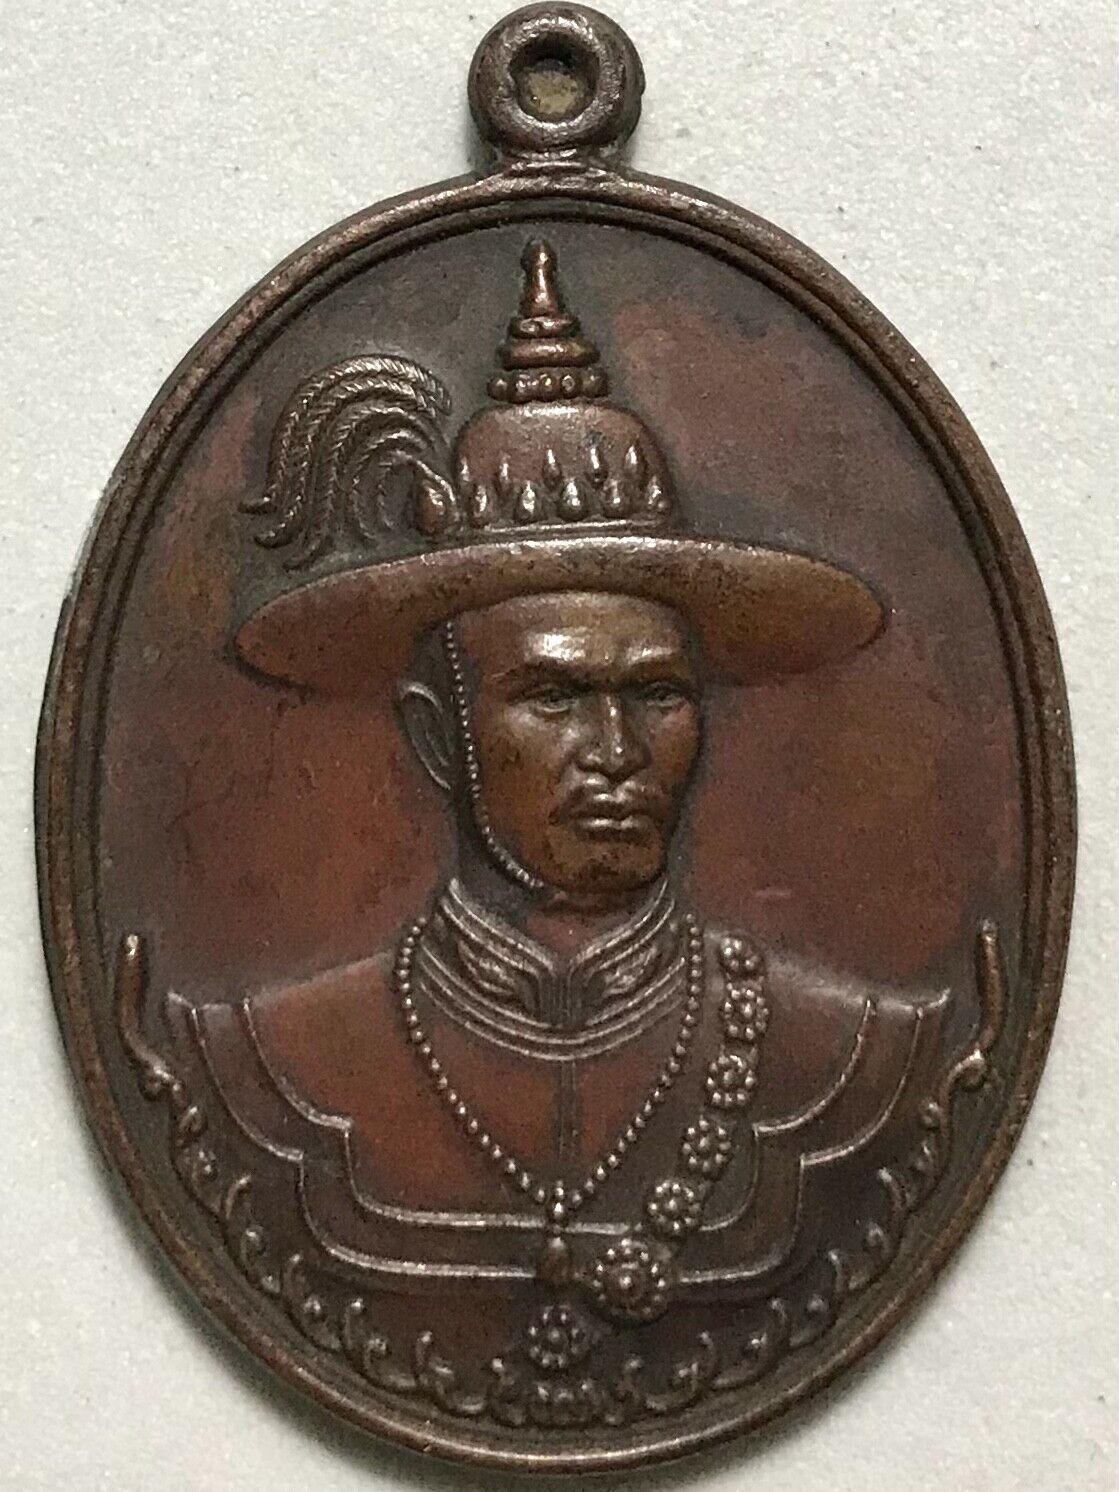 King Taksin Phra Lp Rare Old Thai Buddha Amulet Pendant Magic Ancient Idol#18